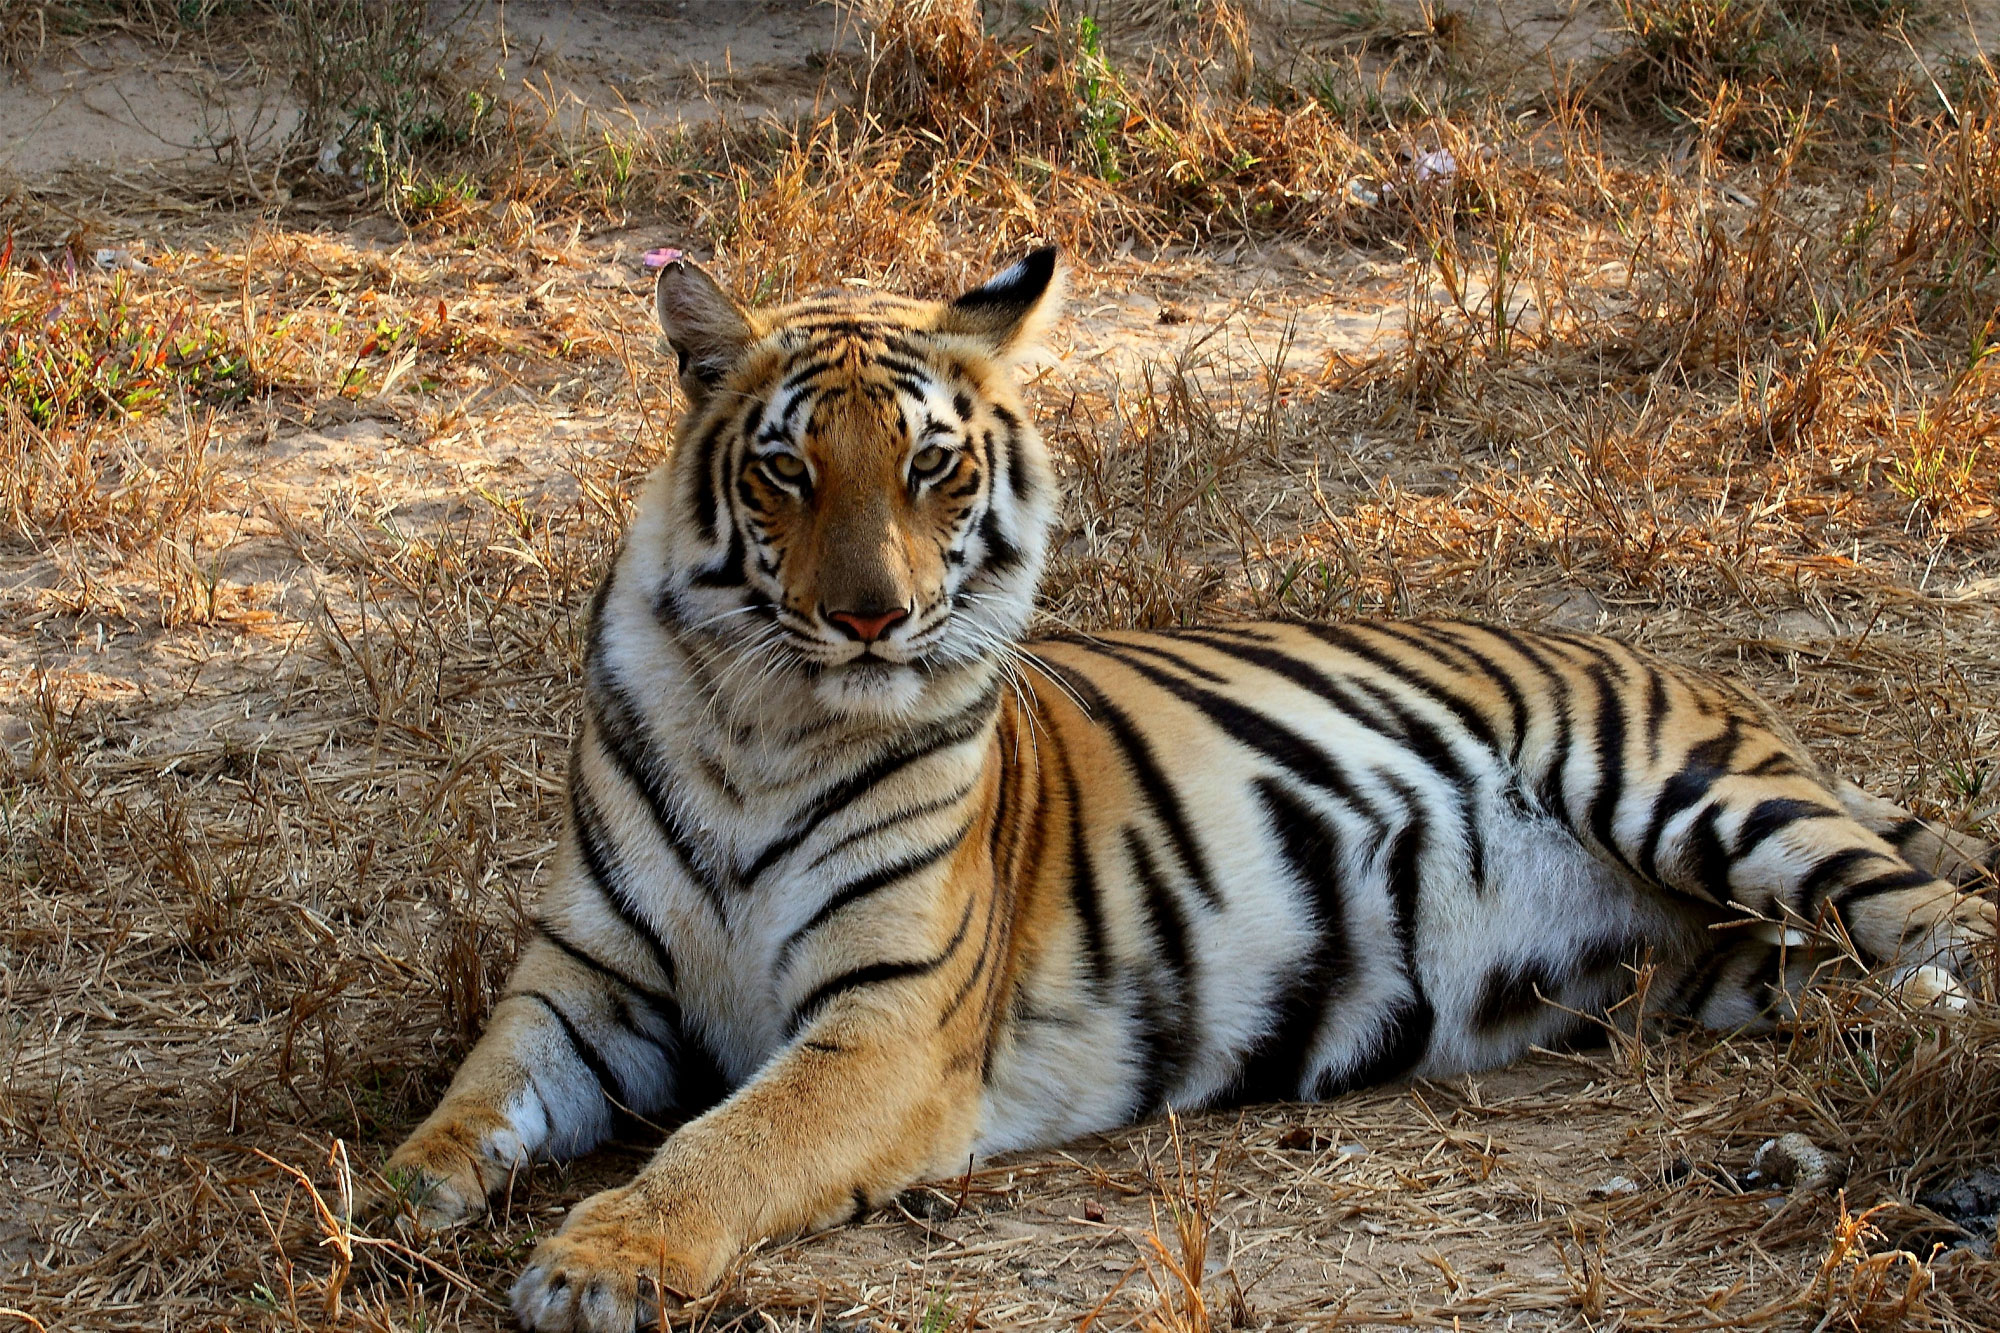 Begal tiger in the Sundarbans